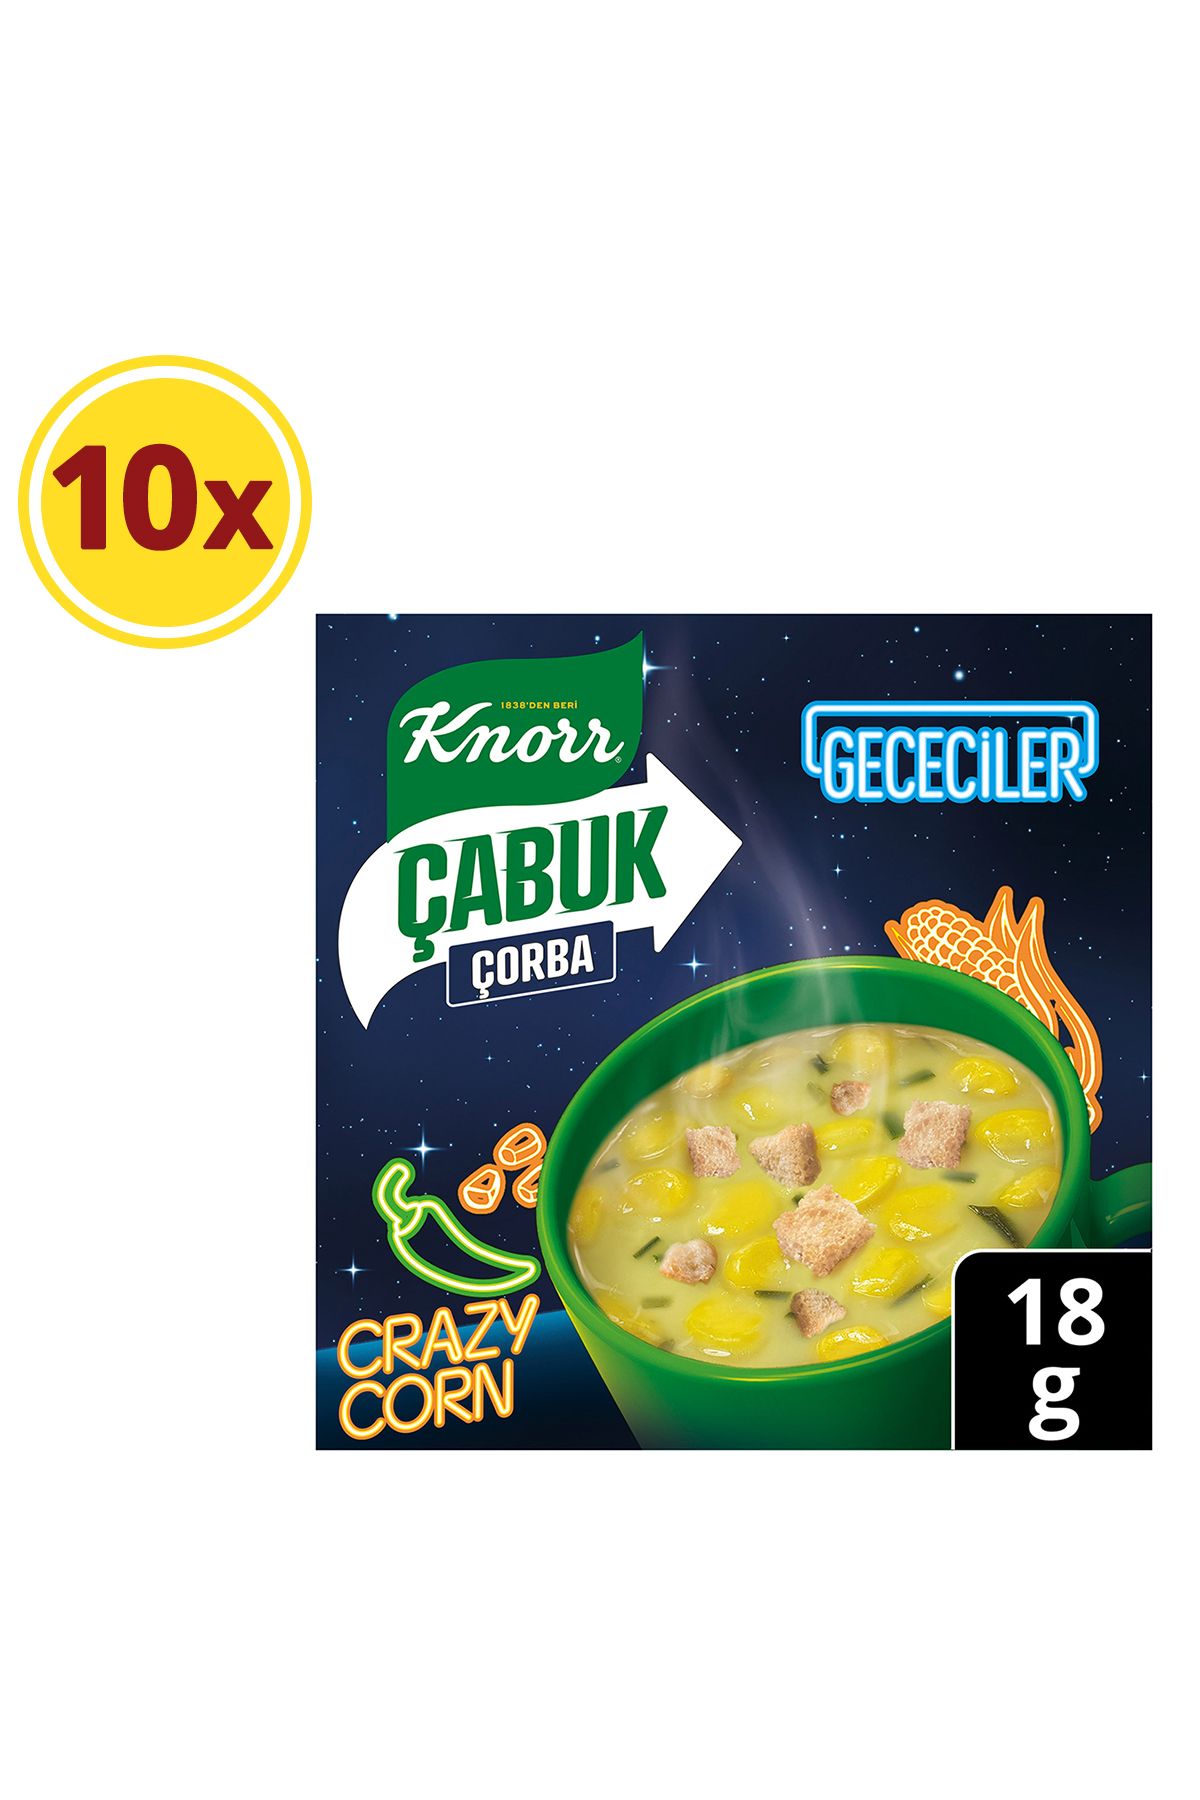 Knorr Çabuk Çorba Gececiler Crazy Corn 18g X10 Adet